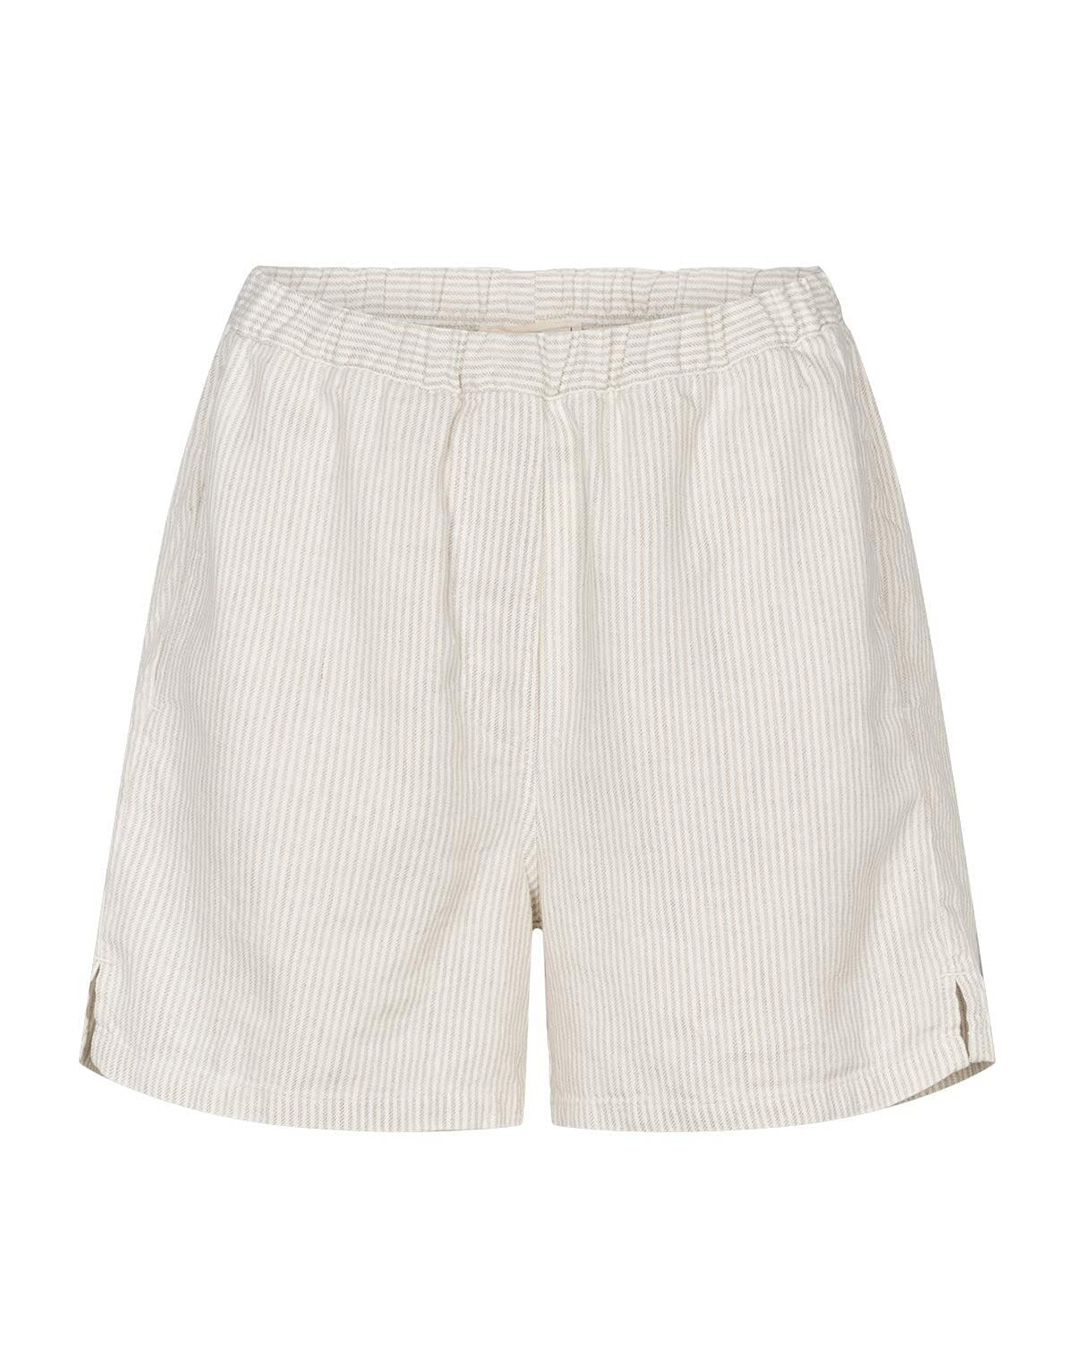 Smalrandiga shorts i off-white och beige med resår i midjan Gai+Lisva